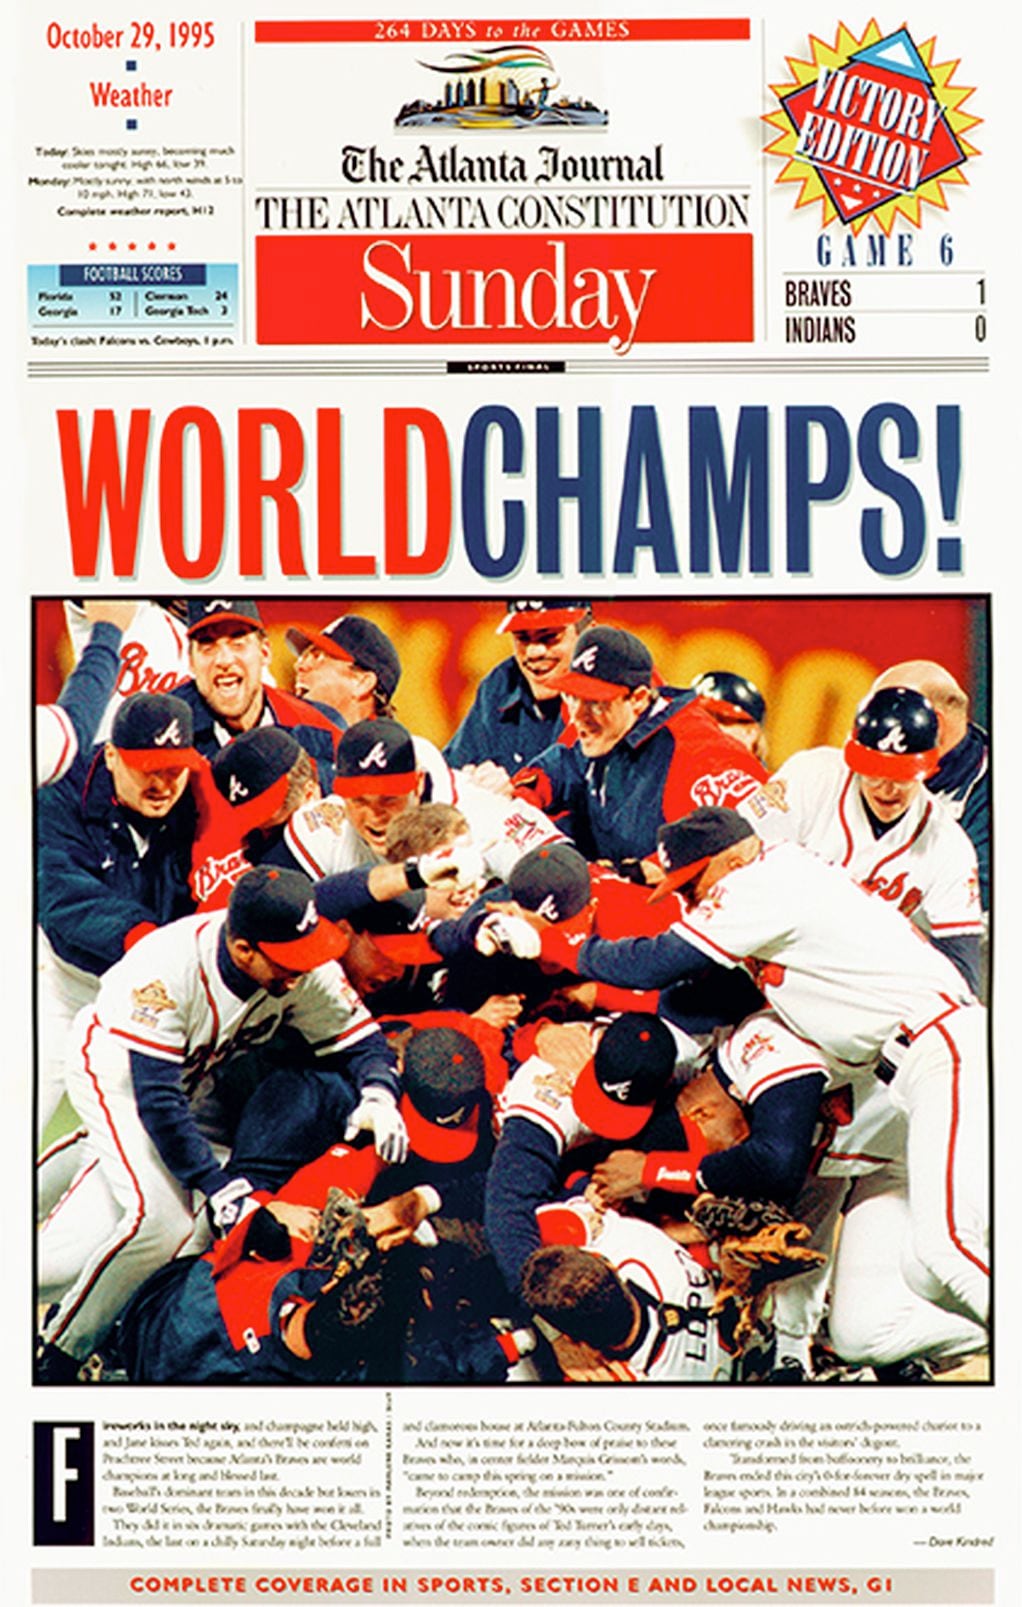 1995 World Series Braves: Dream comes true for Marquis Grissom